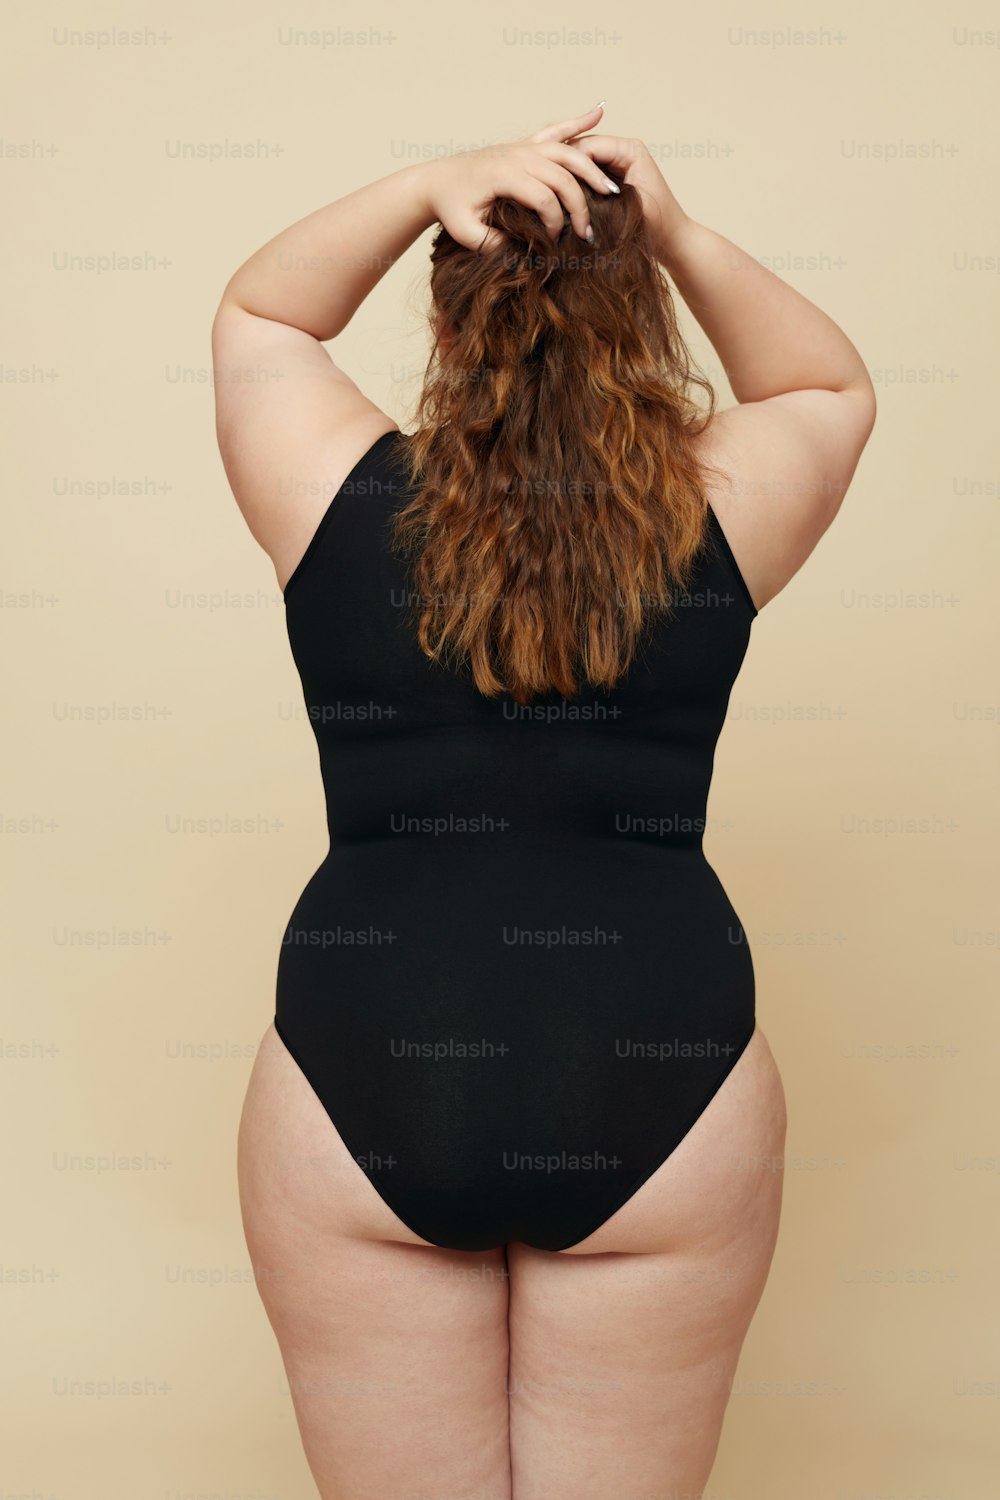 Premium Photo  Plus size model woman in black bodysuits posing